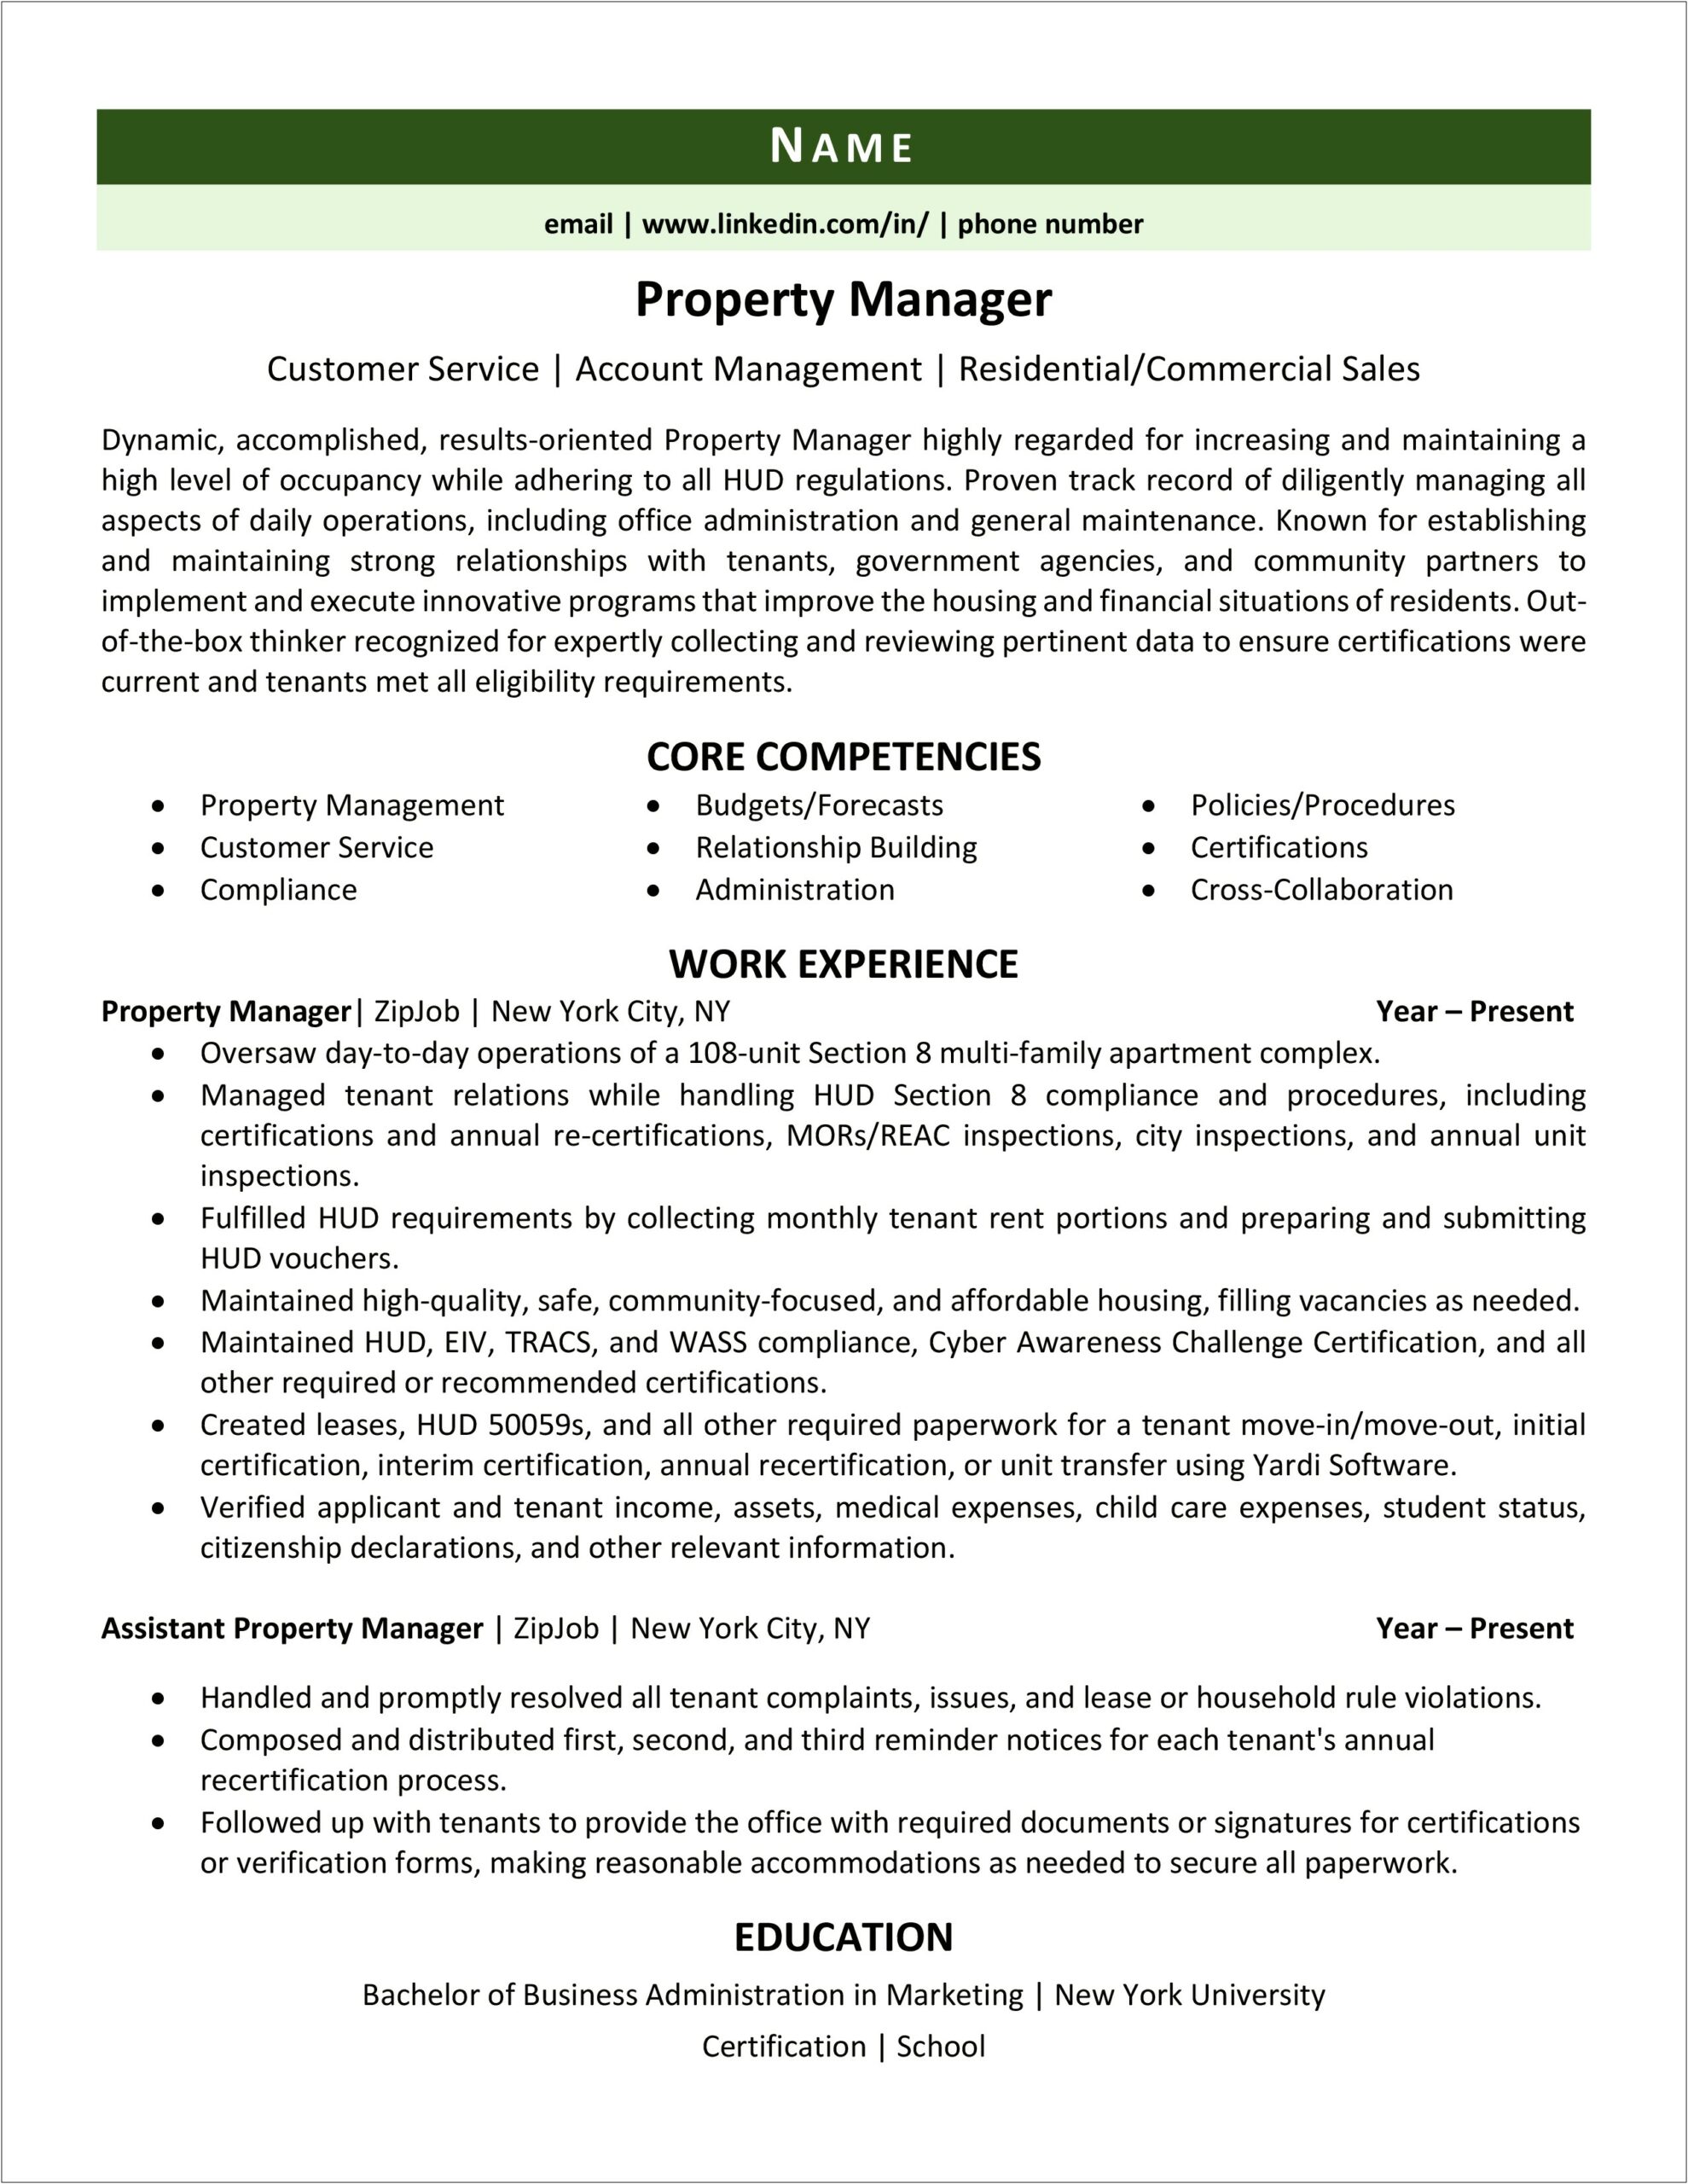 Property Management Skills Resume For Manager Position